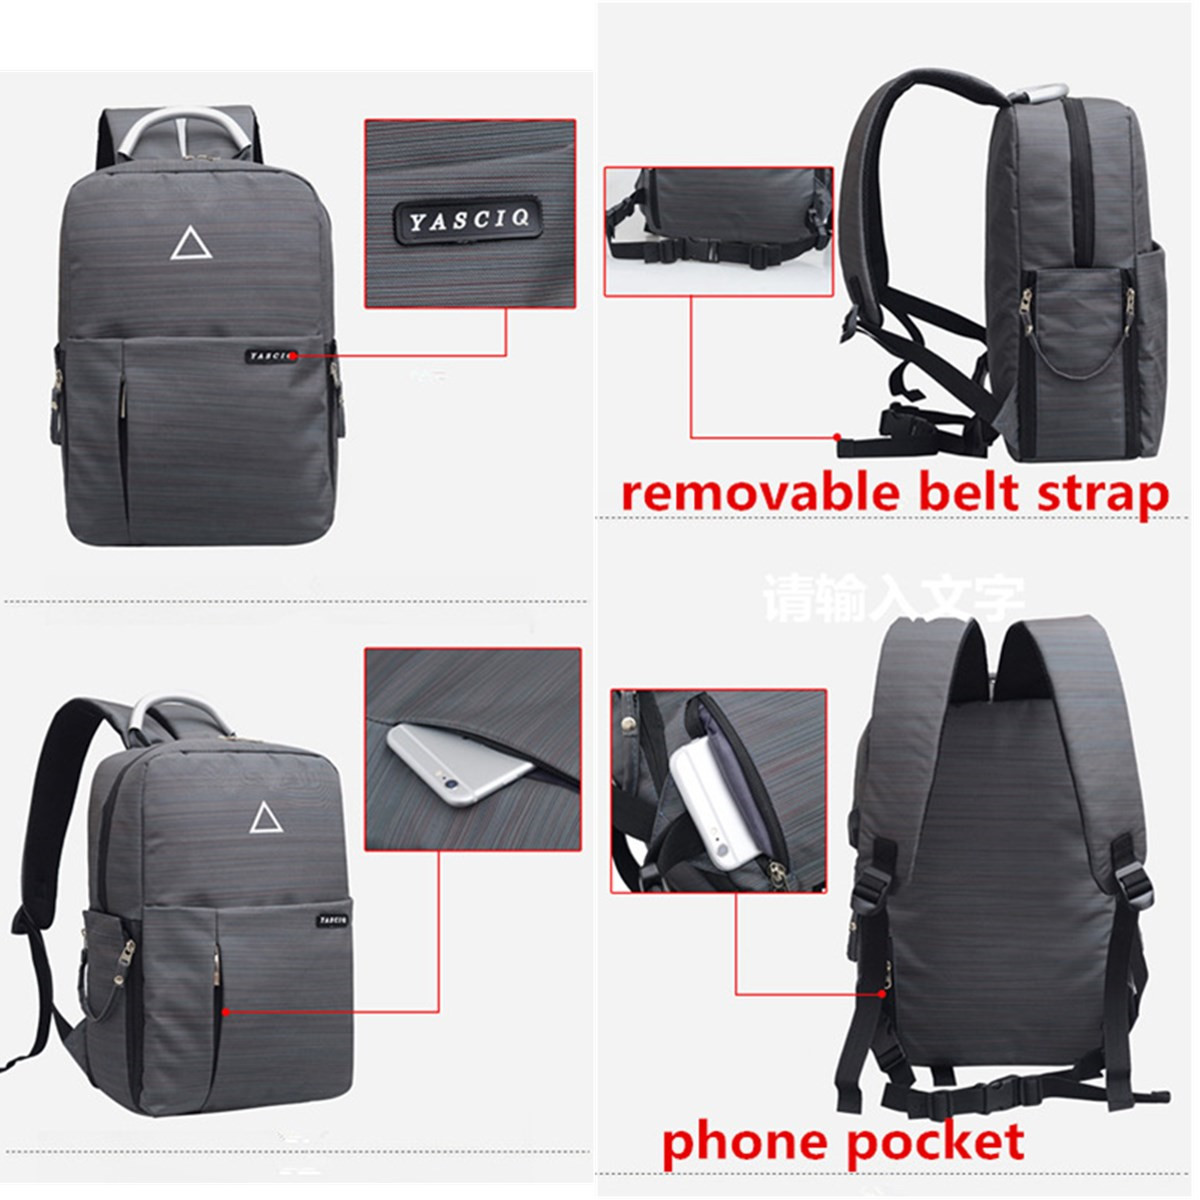 YASCIQ-B-10719-USB-Charging-Camera-Bag-Backpack-for-DSLR-Camera-Lens-Tripod-1334289-5